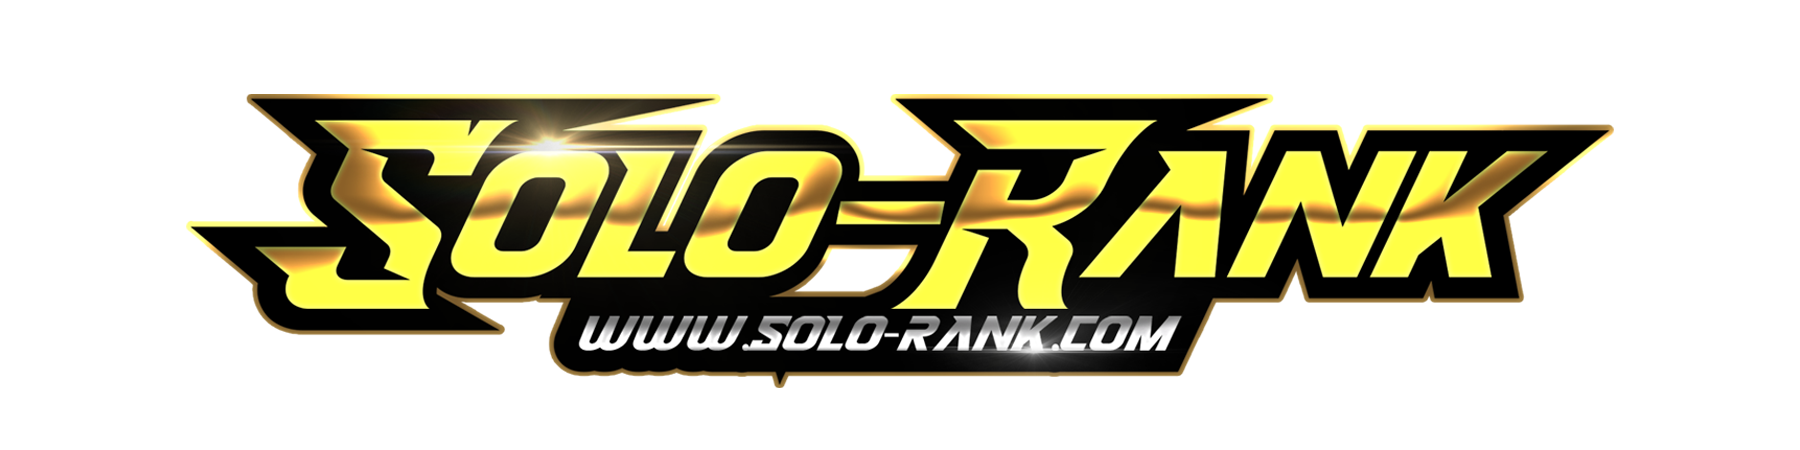 Solo-Rank.com